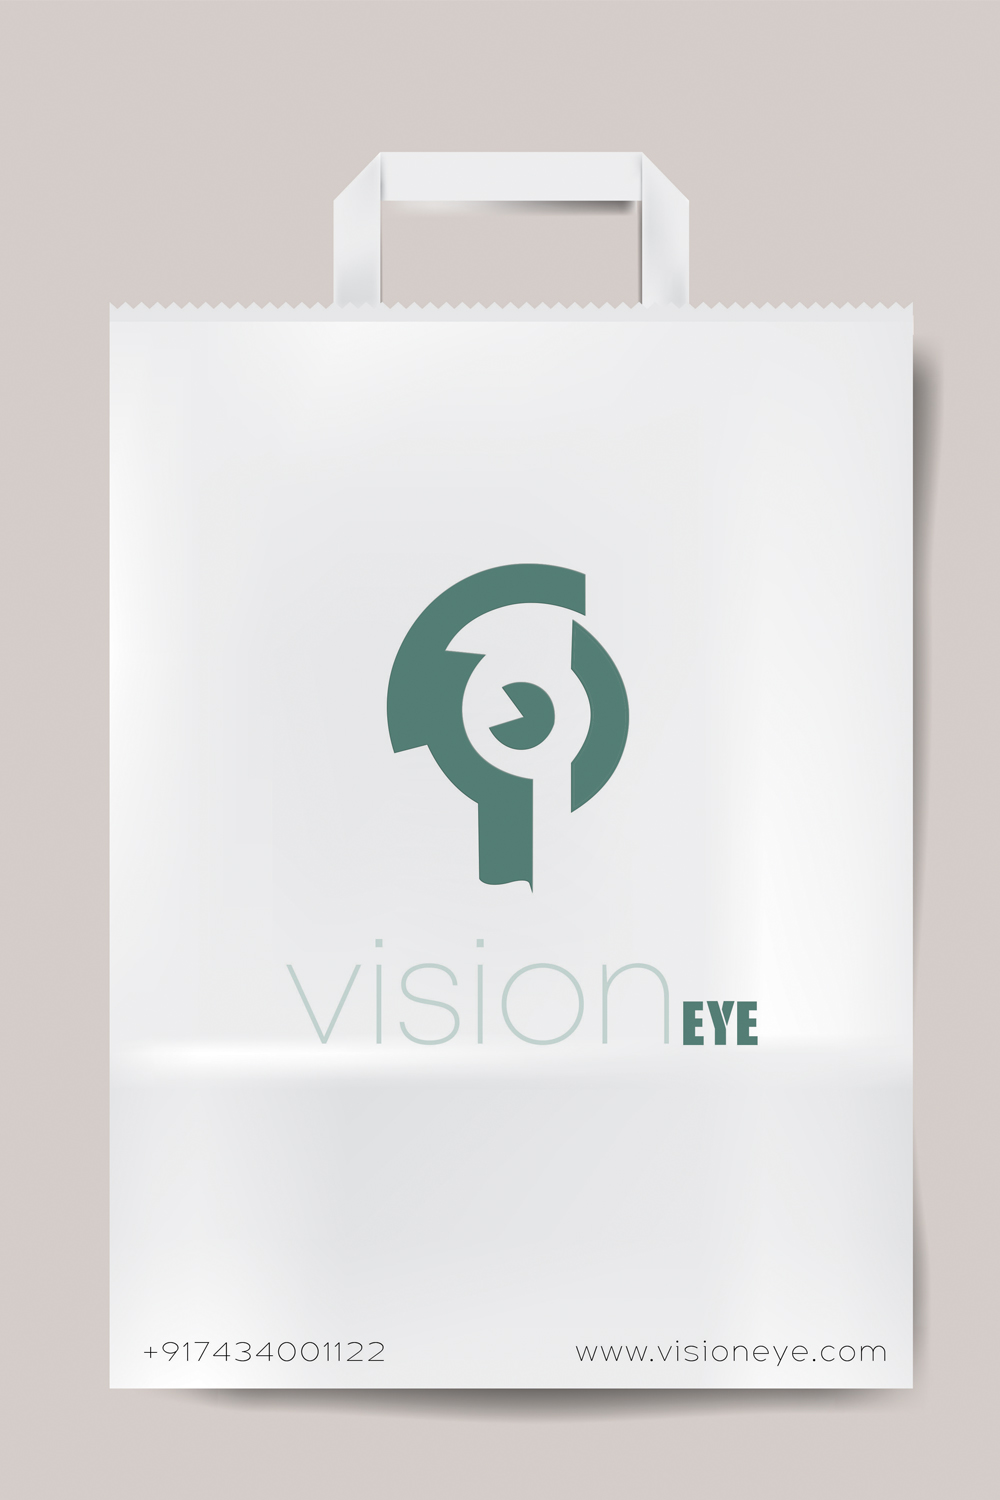 Logo vision eye pinterest preview image.